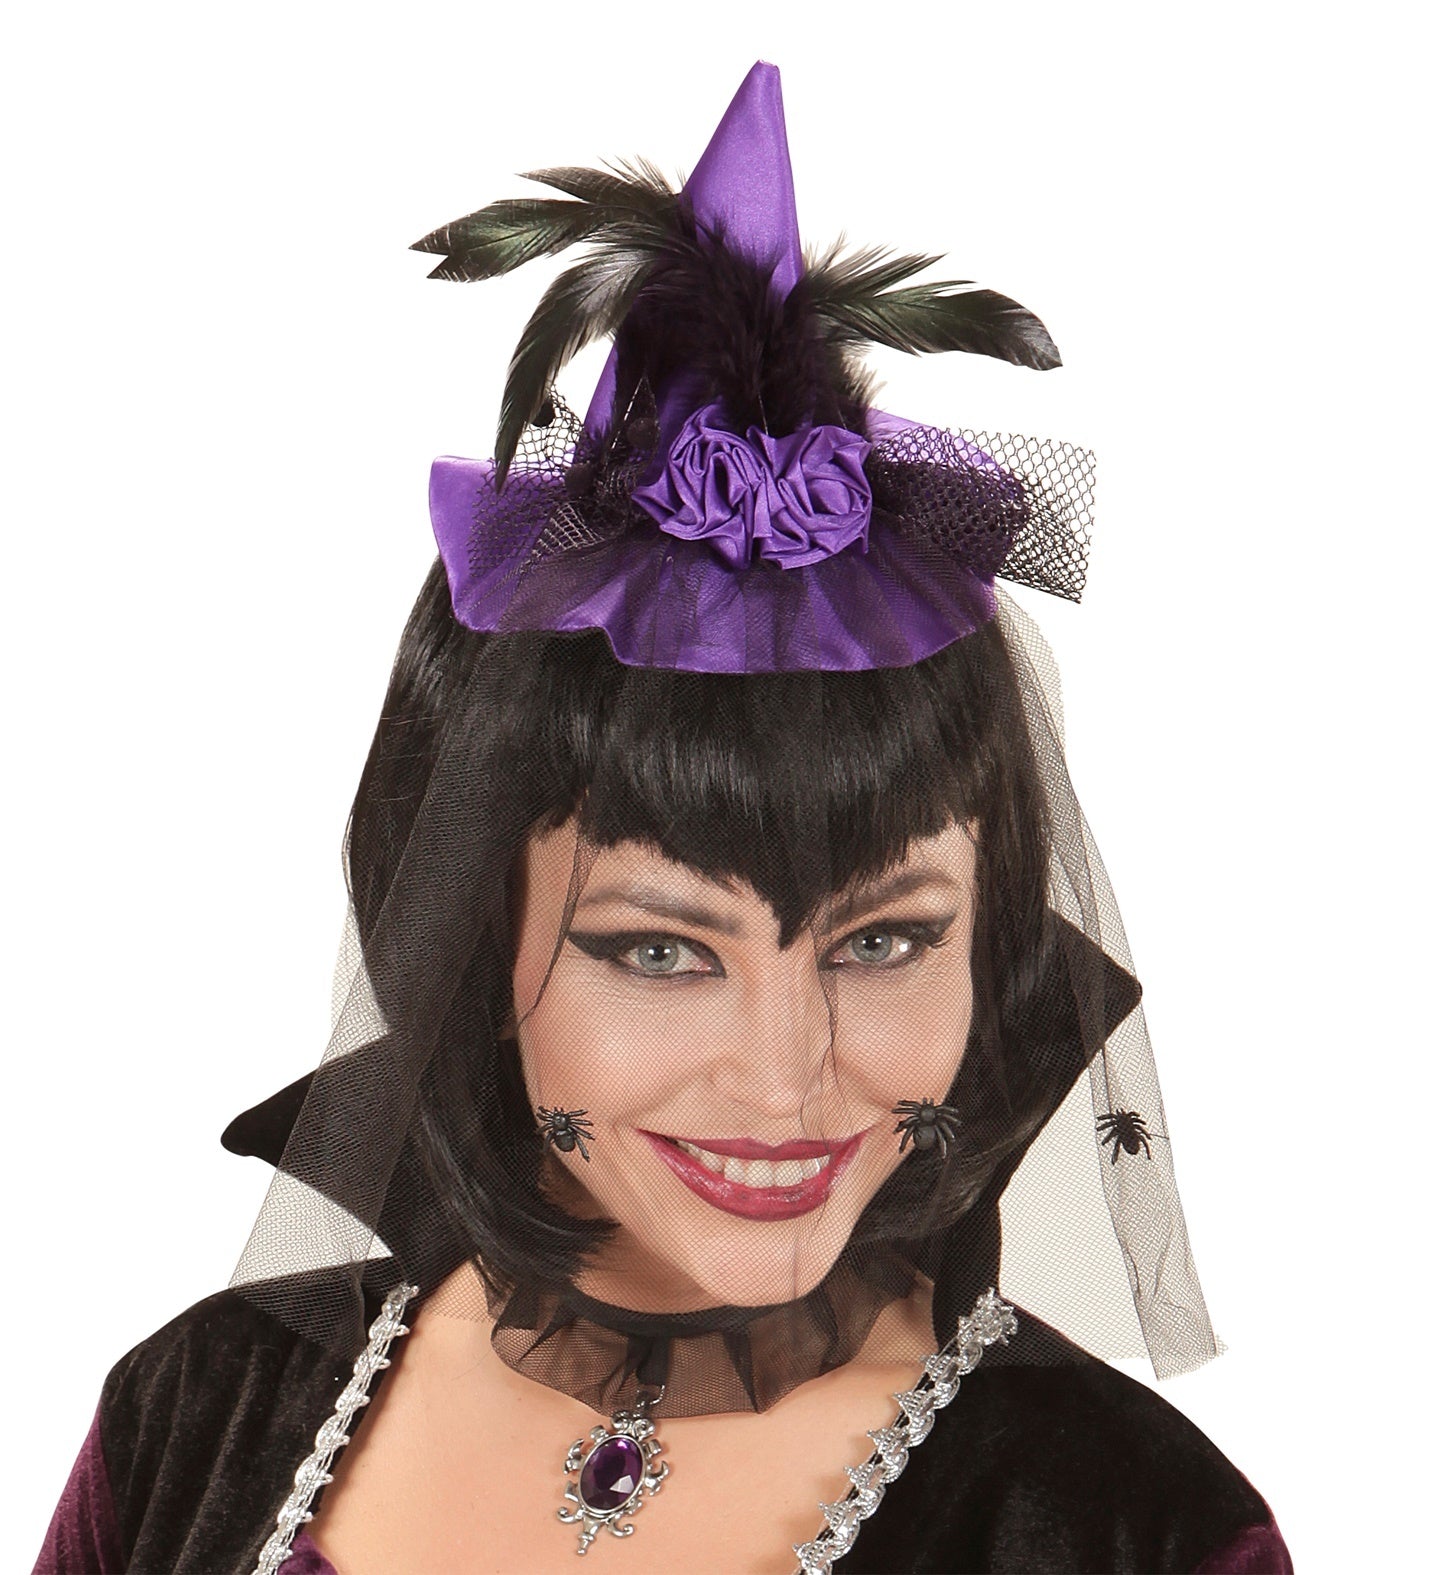 Widmann - Heks & Spider Lady & Voodoo & Duistere Religie Kostuum - Paarse Mini Heksenhoed Met Sluier - paars - Halloween - Verkleedkleding